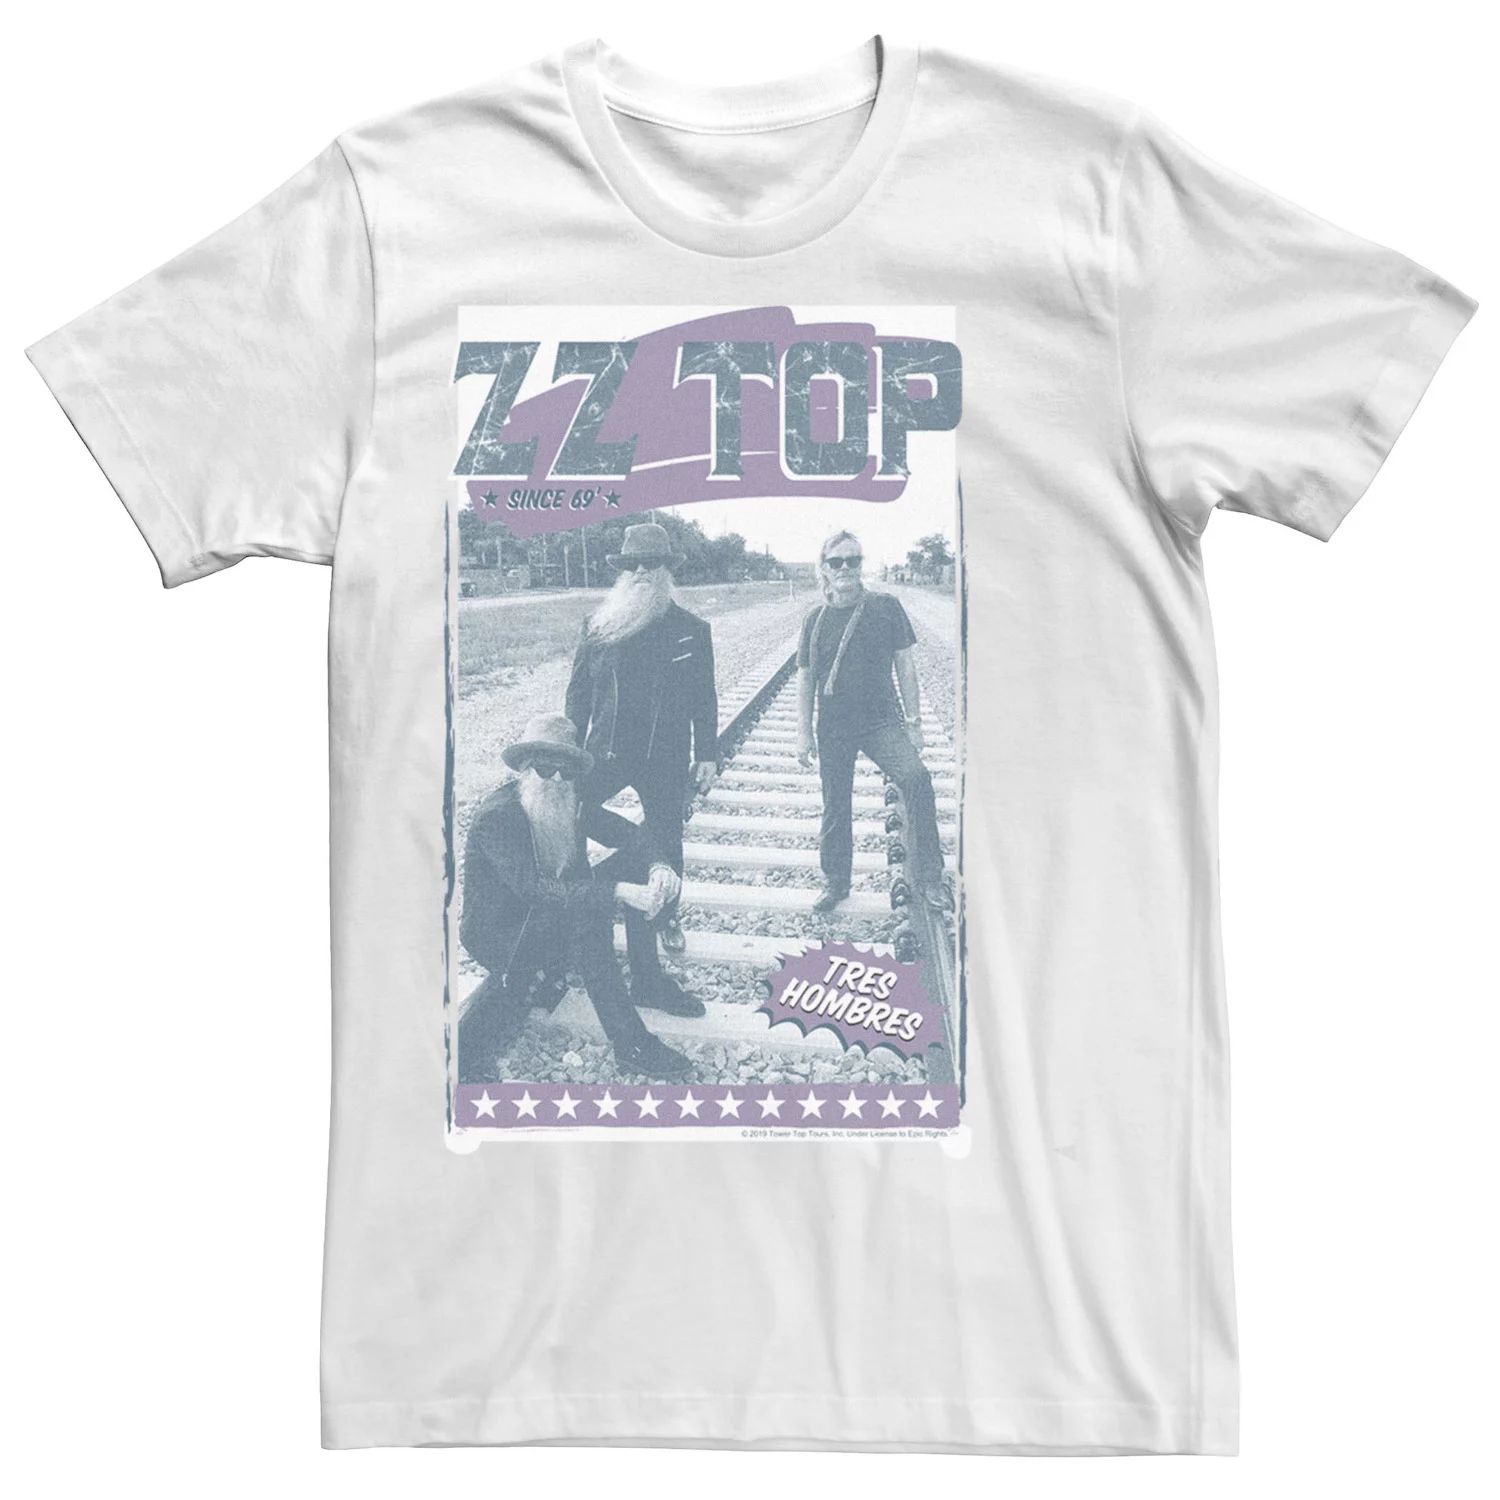 Мужская футболка с длинными рукавами и графическим рисунком ZZ Top Tres Hombres Railroad Licensed Character